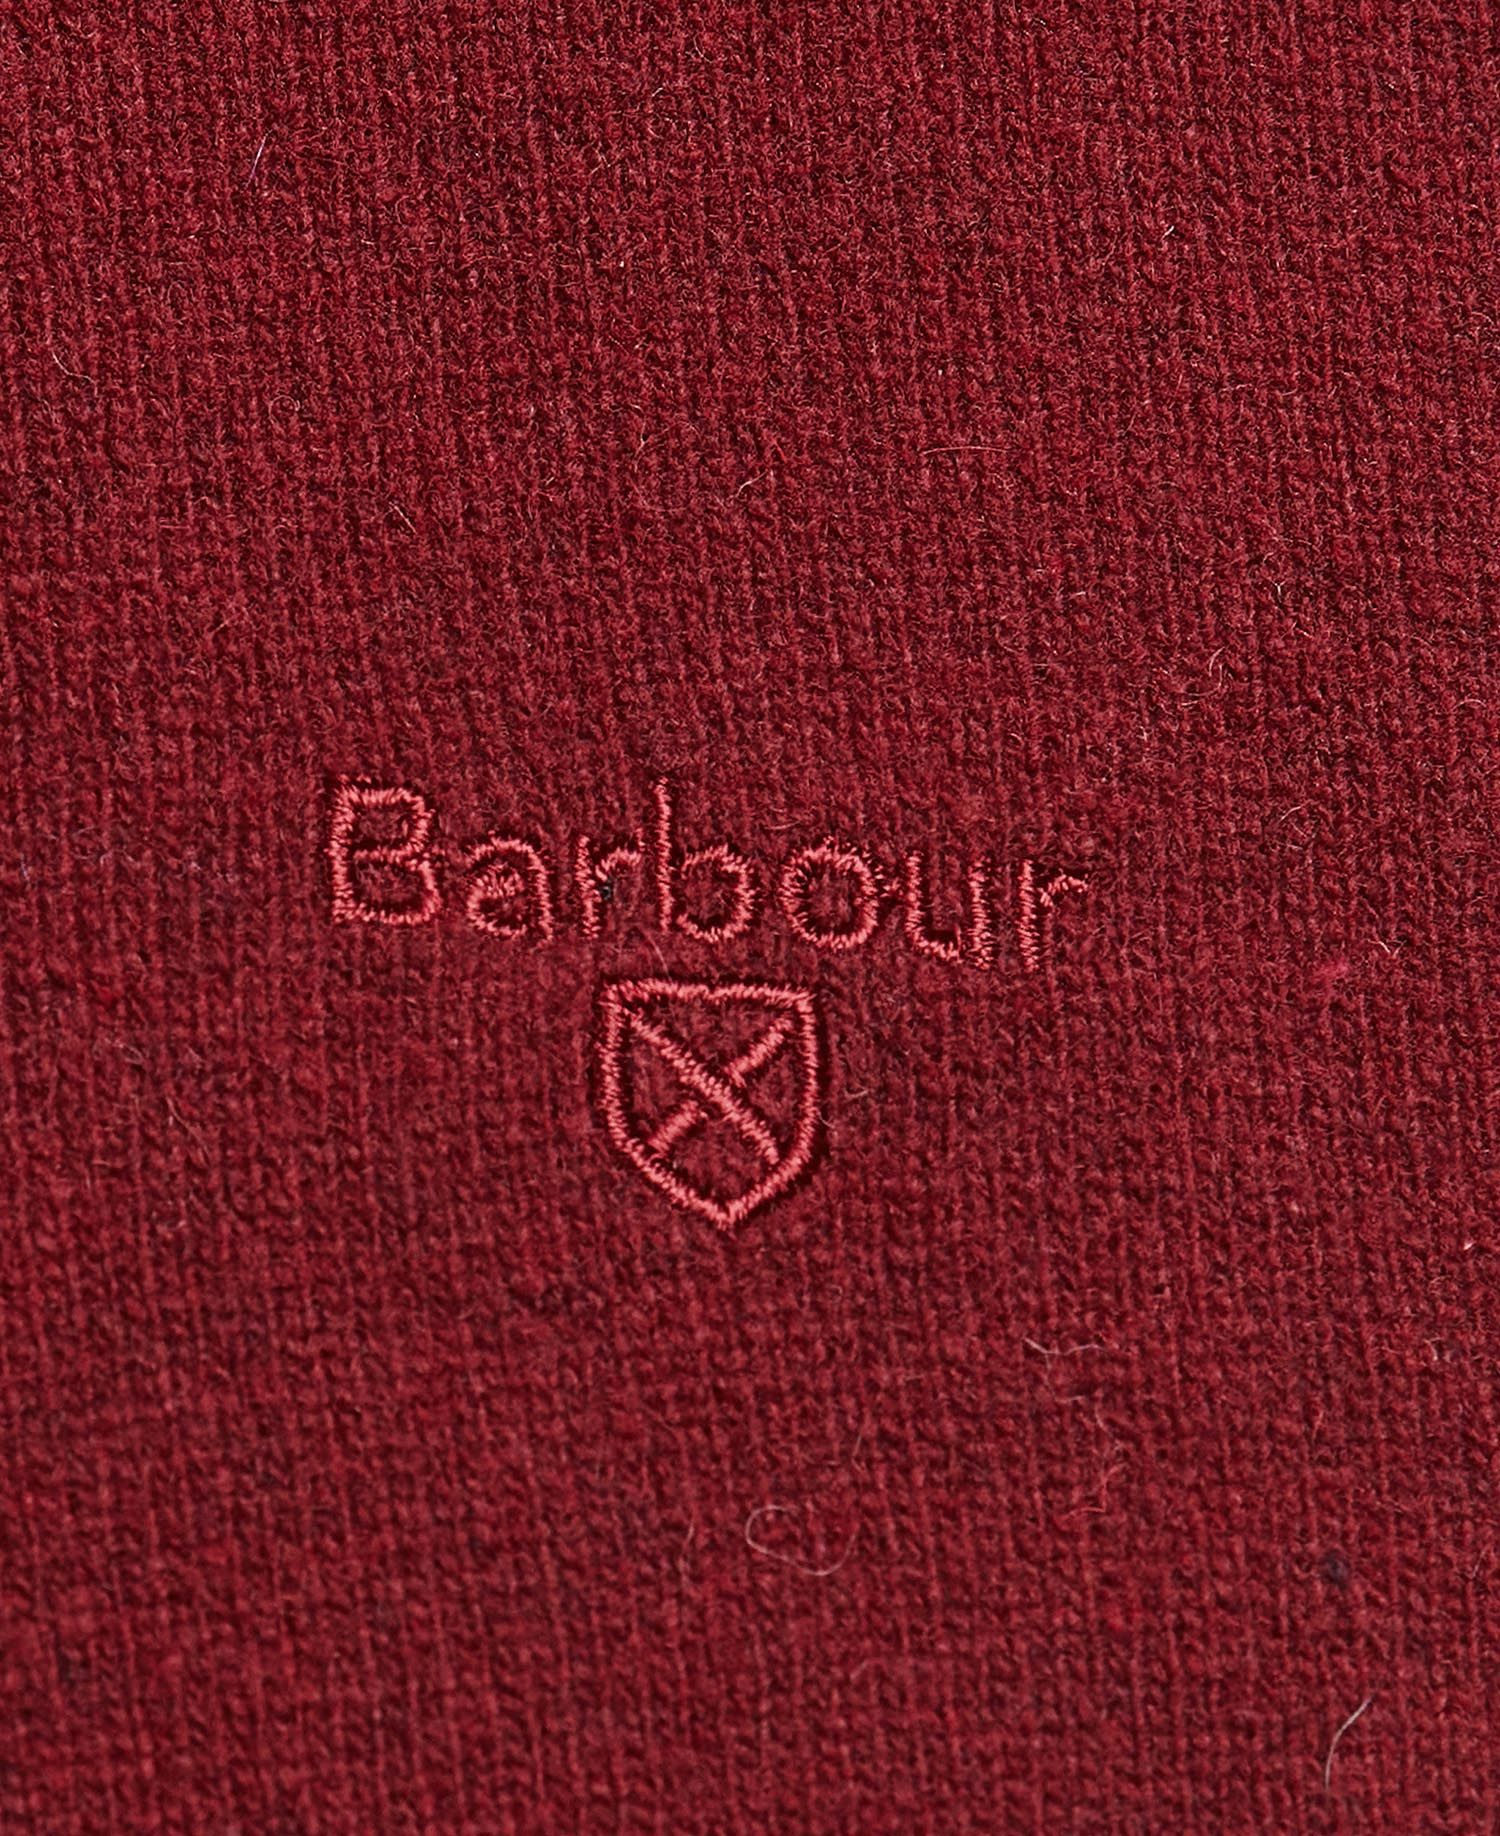 Maglia Barbour girocollo / Bordeaux - Ideal Moda